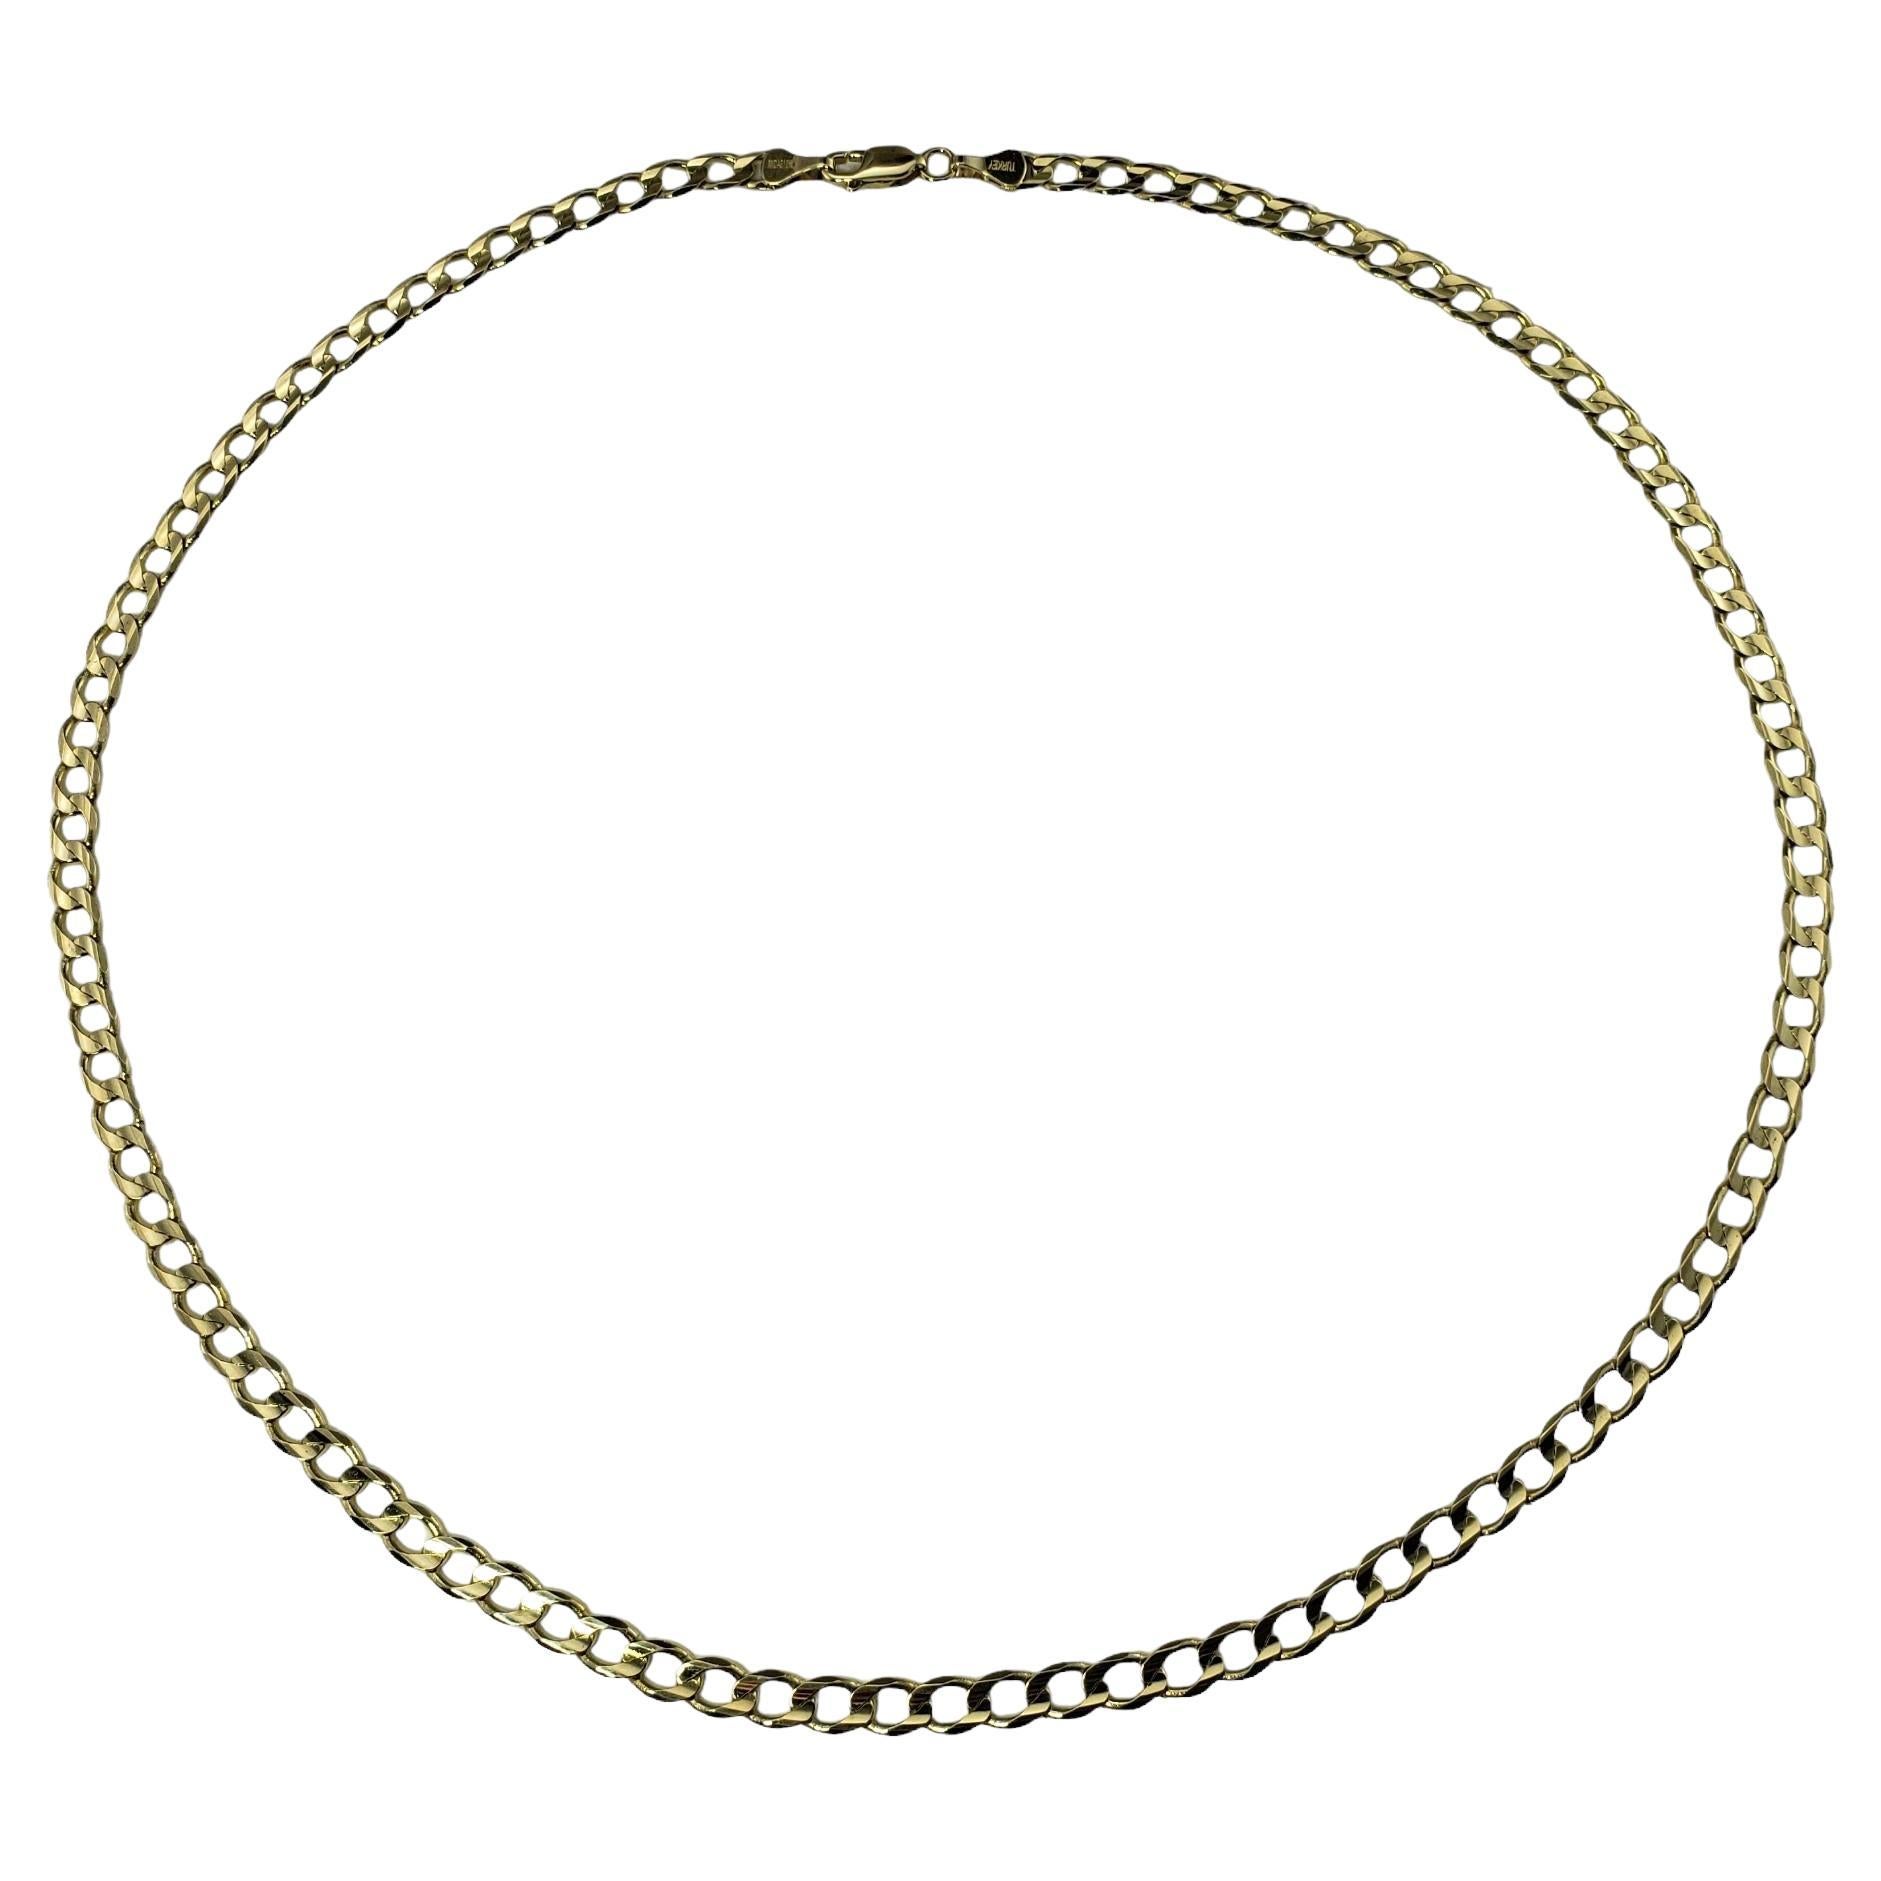 Vintage 10 Karat Yellow Gold Curb Chain Necklace #15329